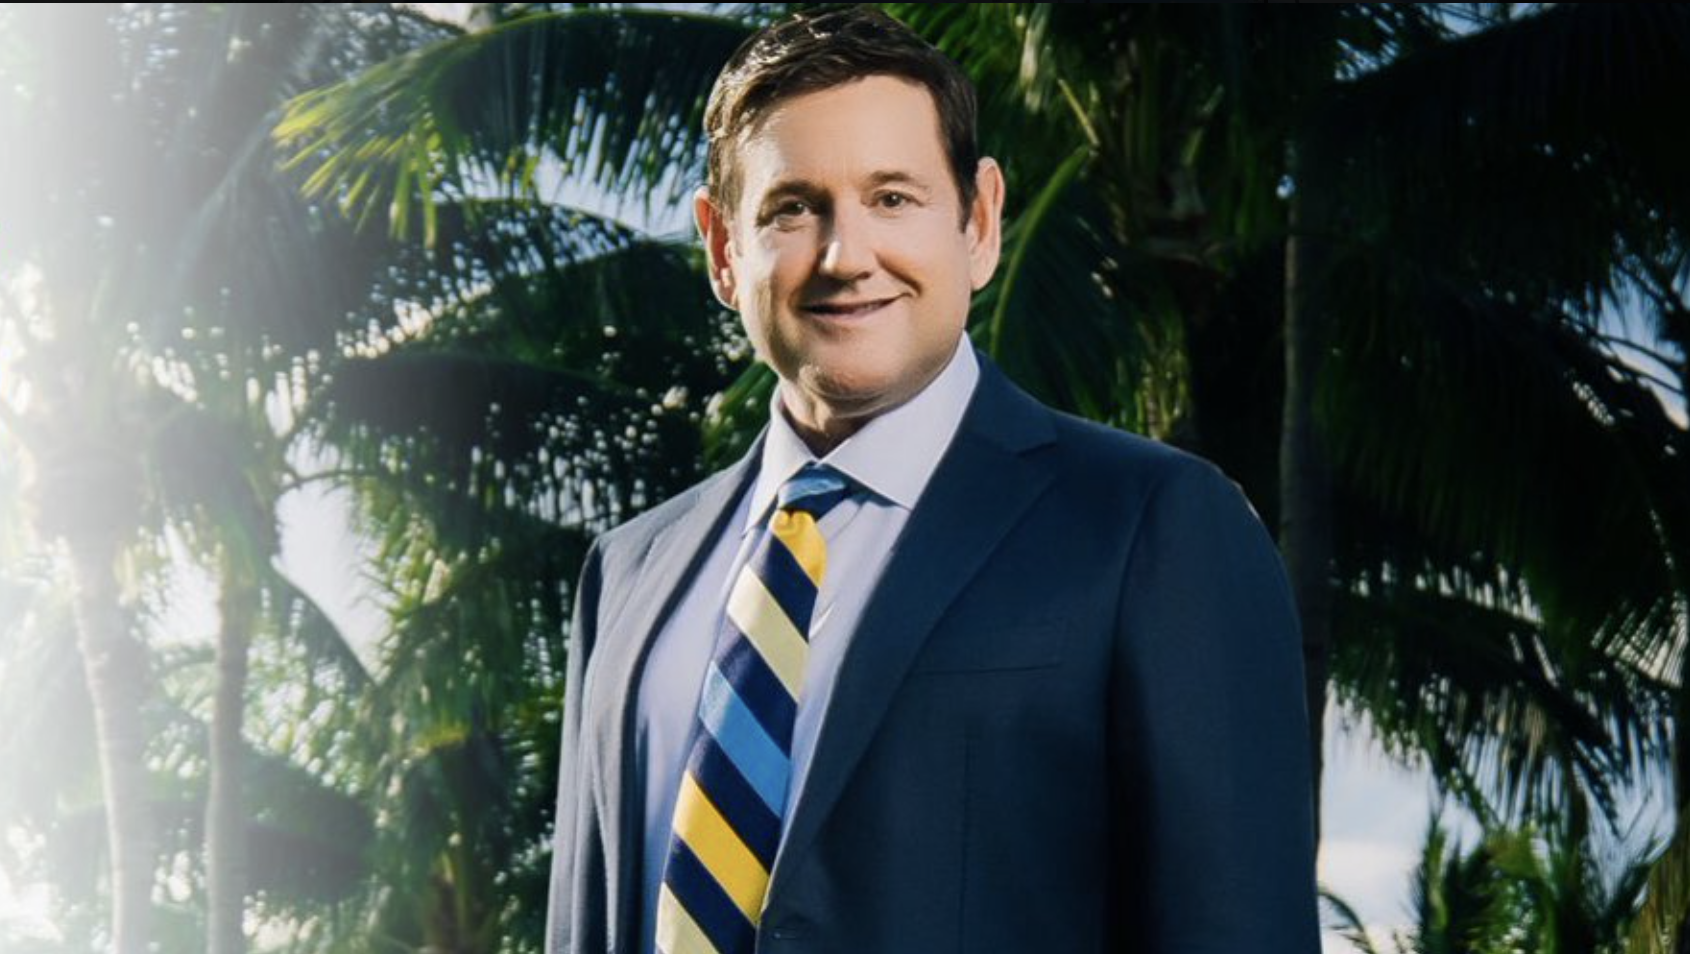 Michael Gongora for Miami Beach Mayor